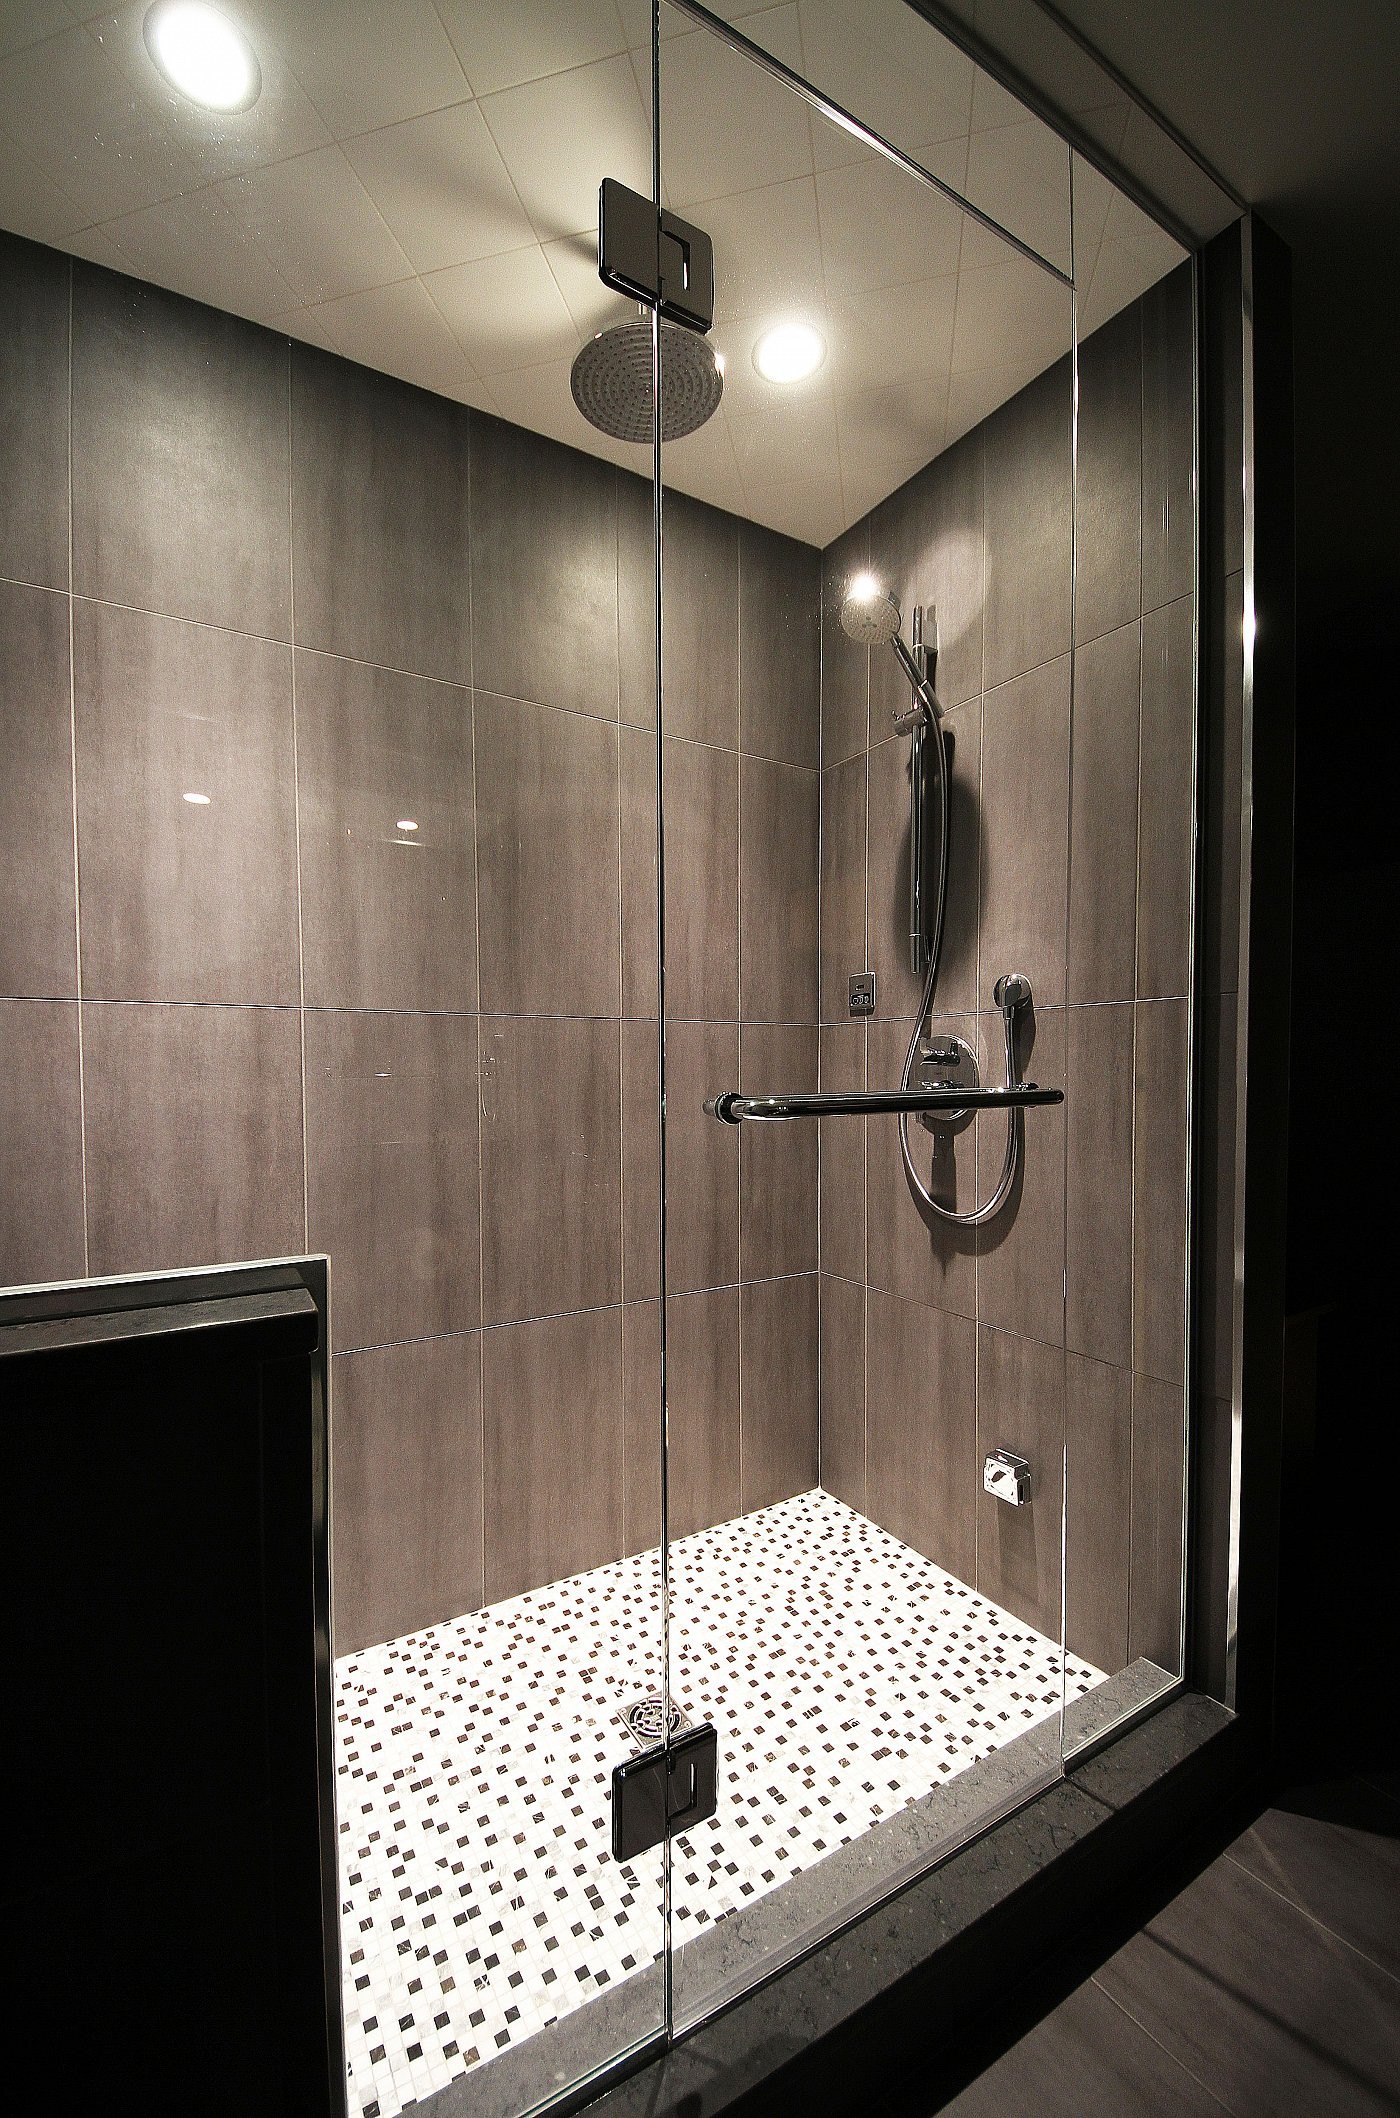 Bathroom Shower Designs
 Using Pebbles for Unique Natural Decorating Bathroom Ideas